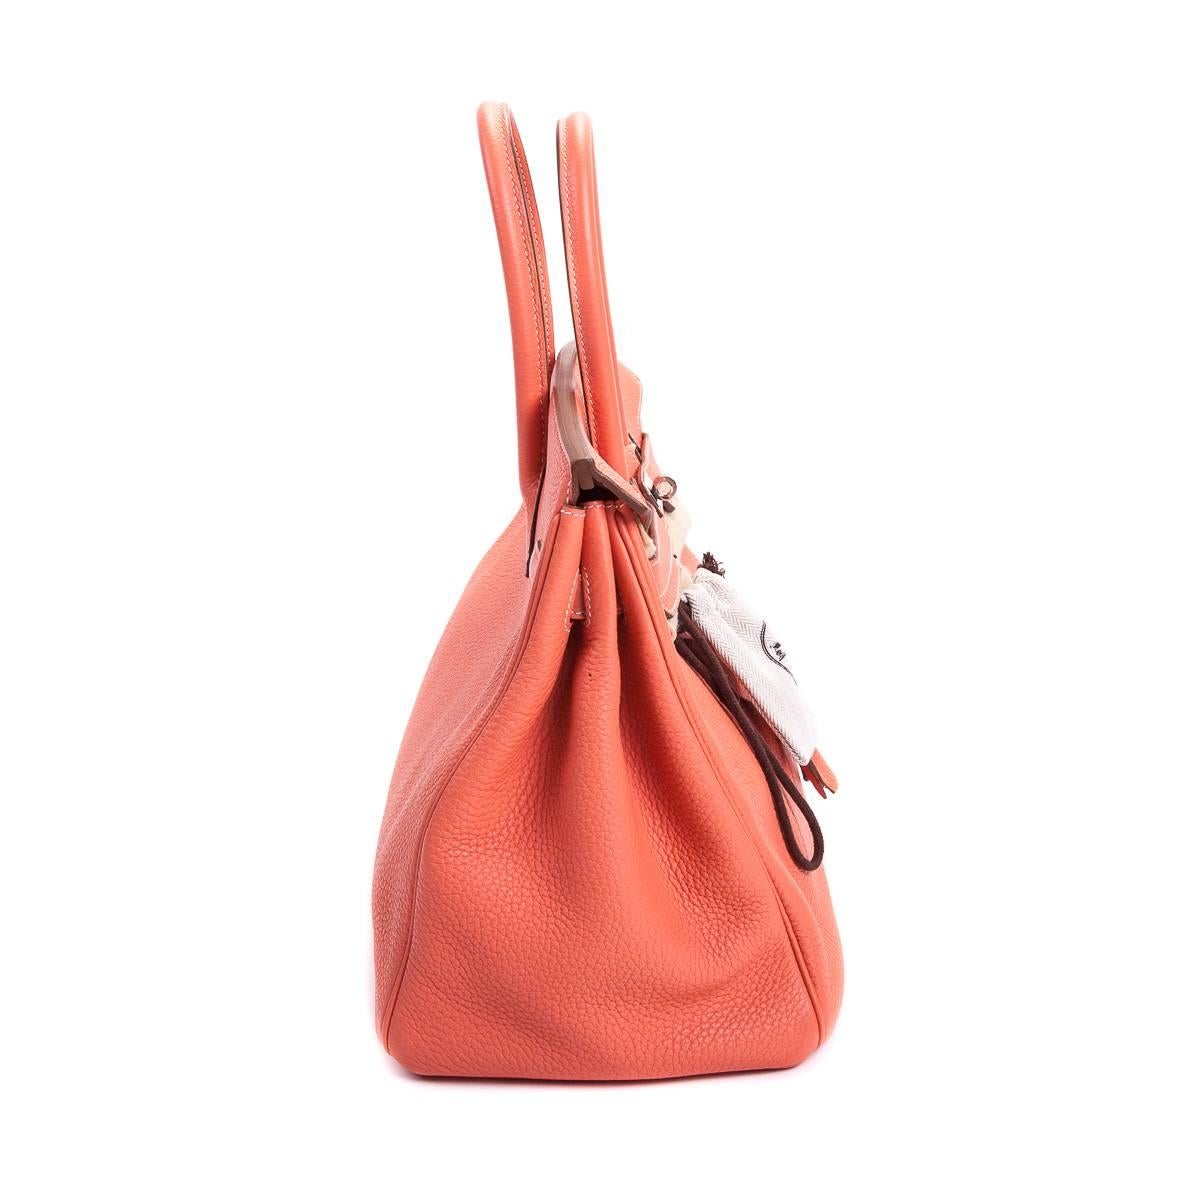 Hermes Birkin Handbag 35 in Crevette Clemence Leather with Palladium  For Sale 1